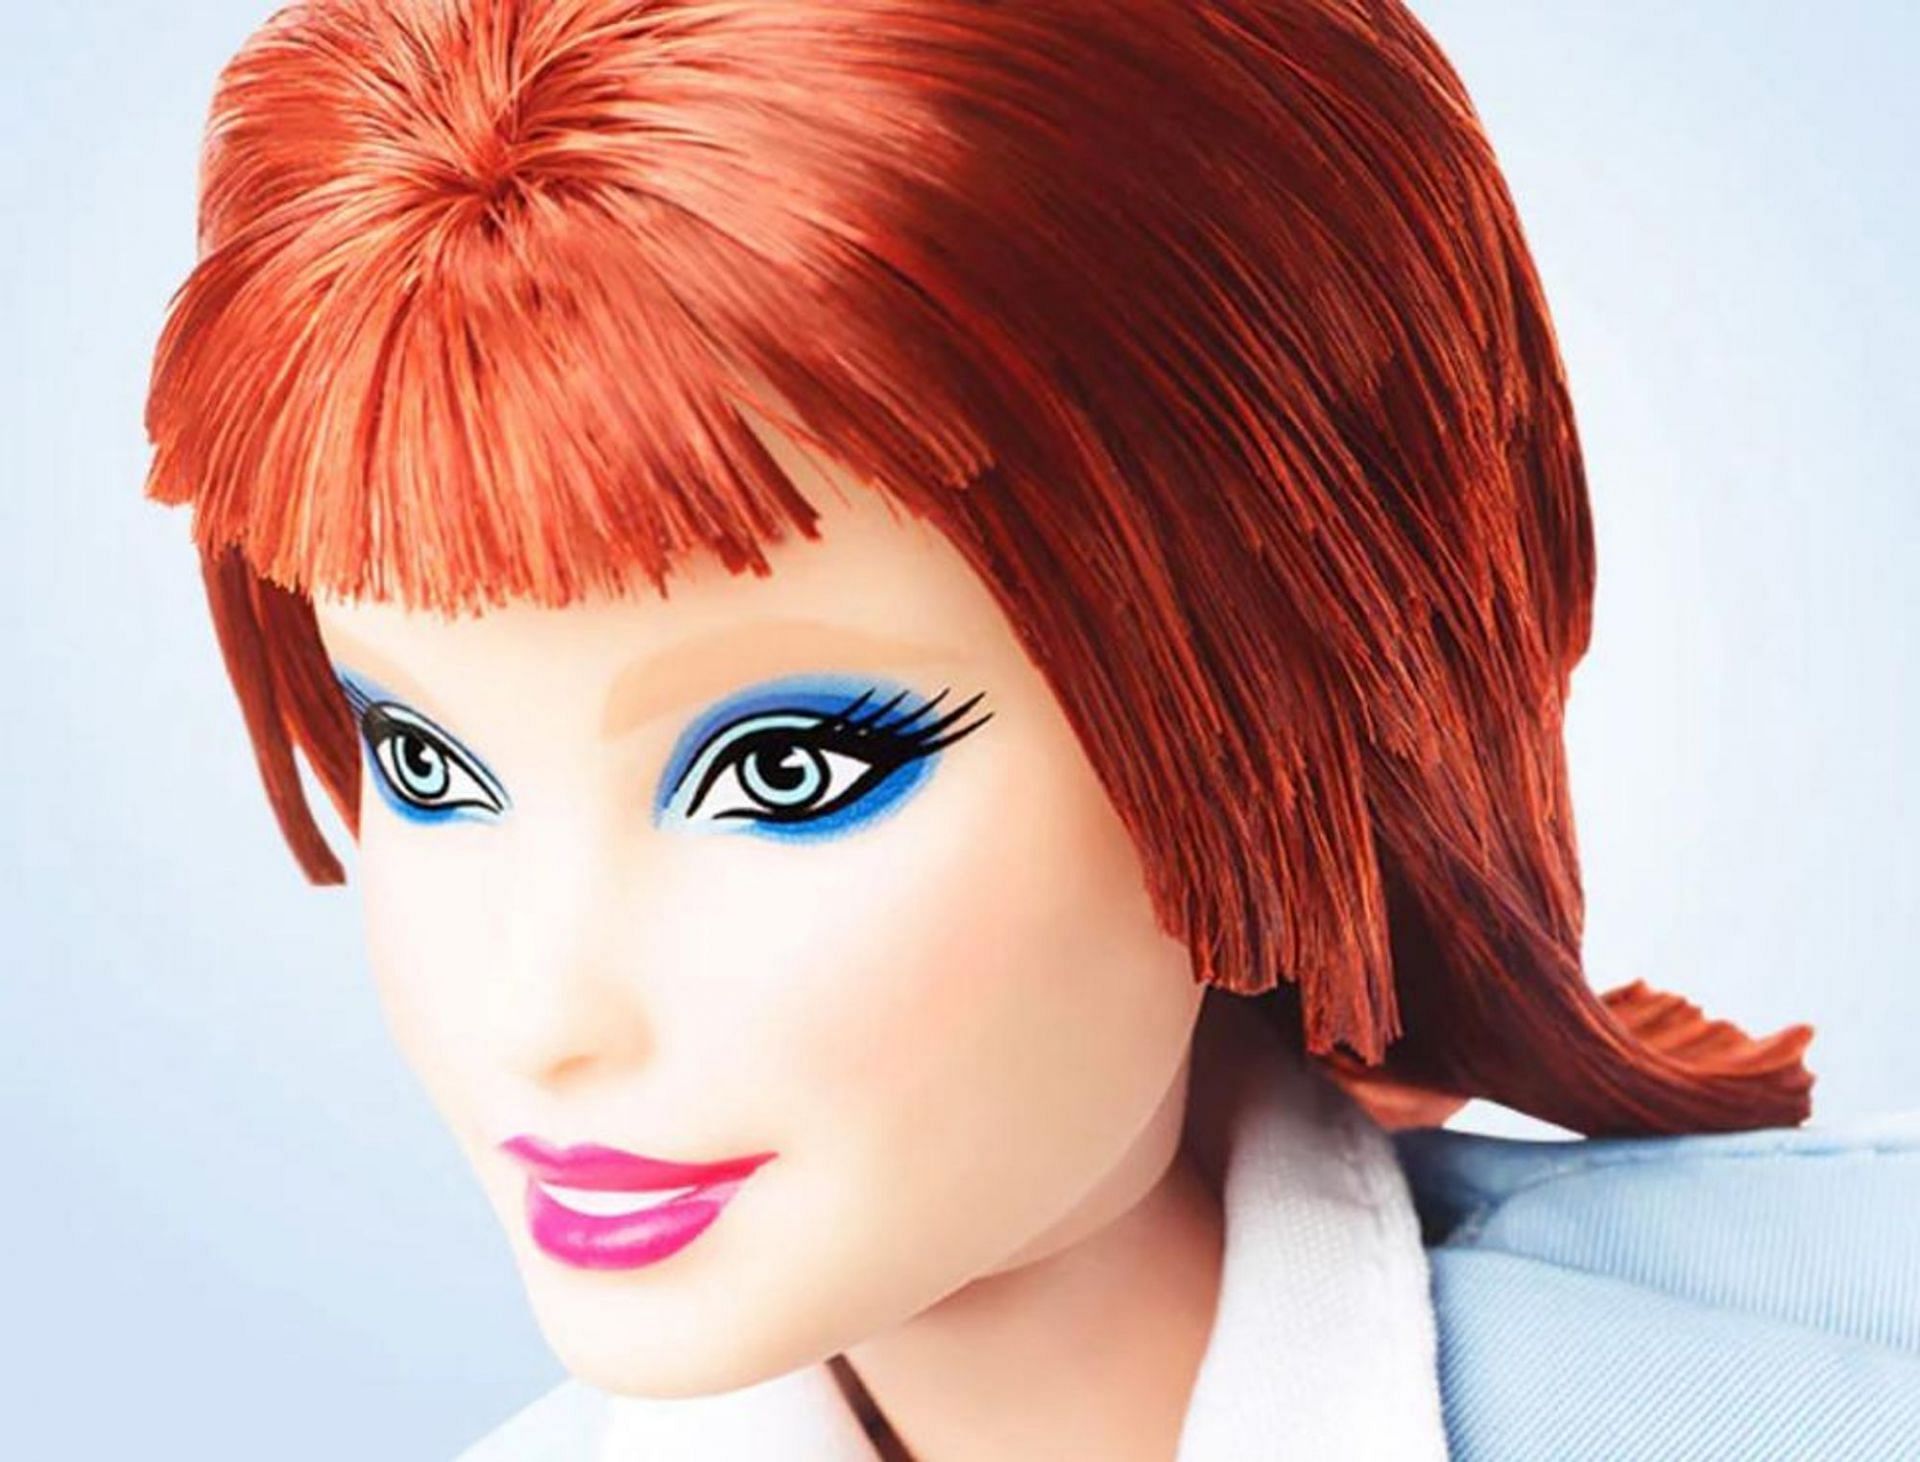 Mattel releases David Bowie Barbie Doll (Image via Mattel)